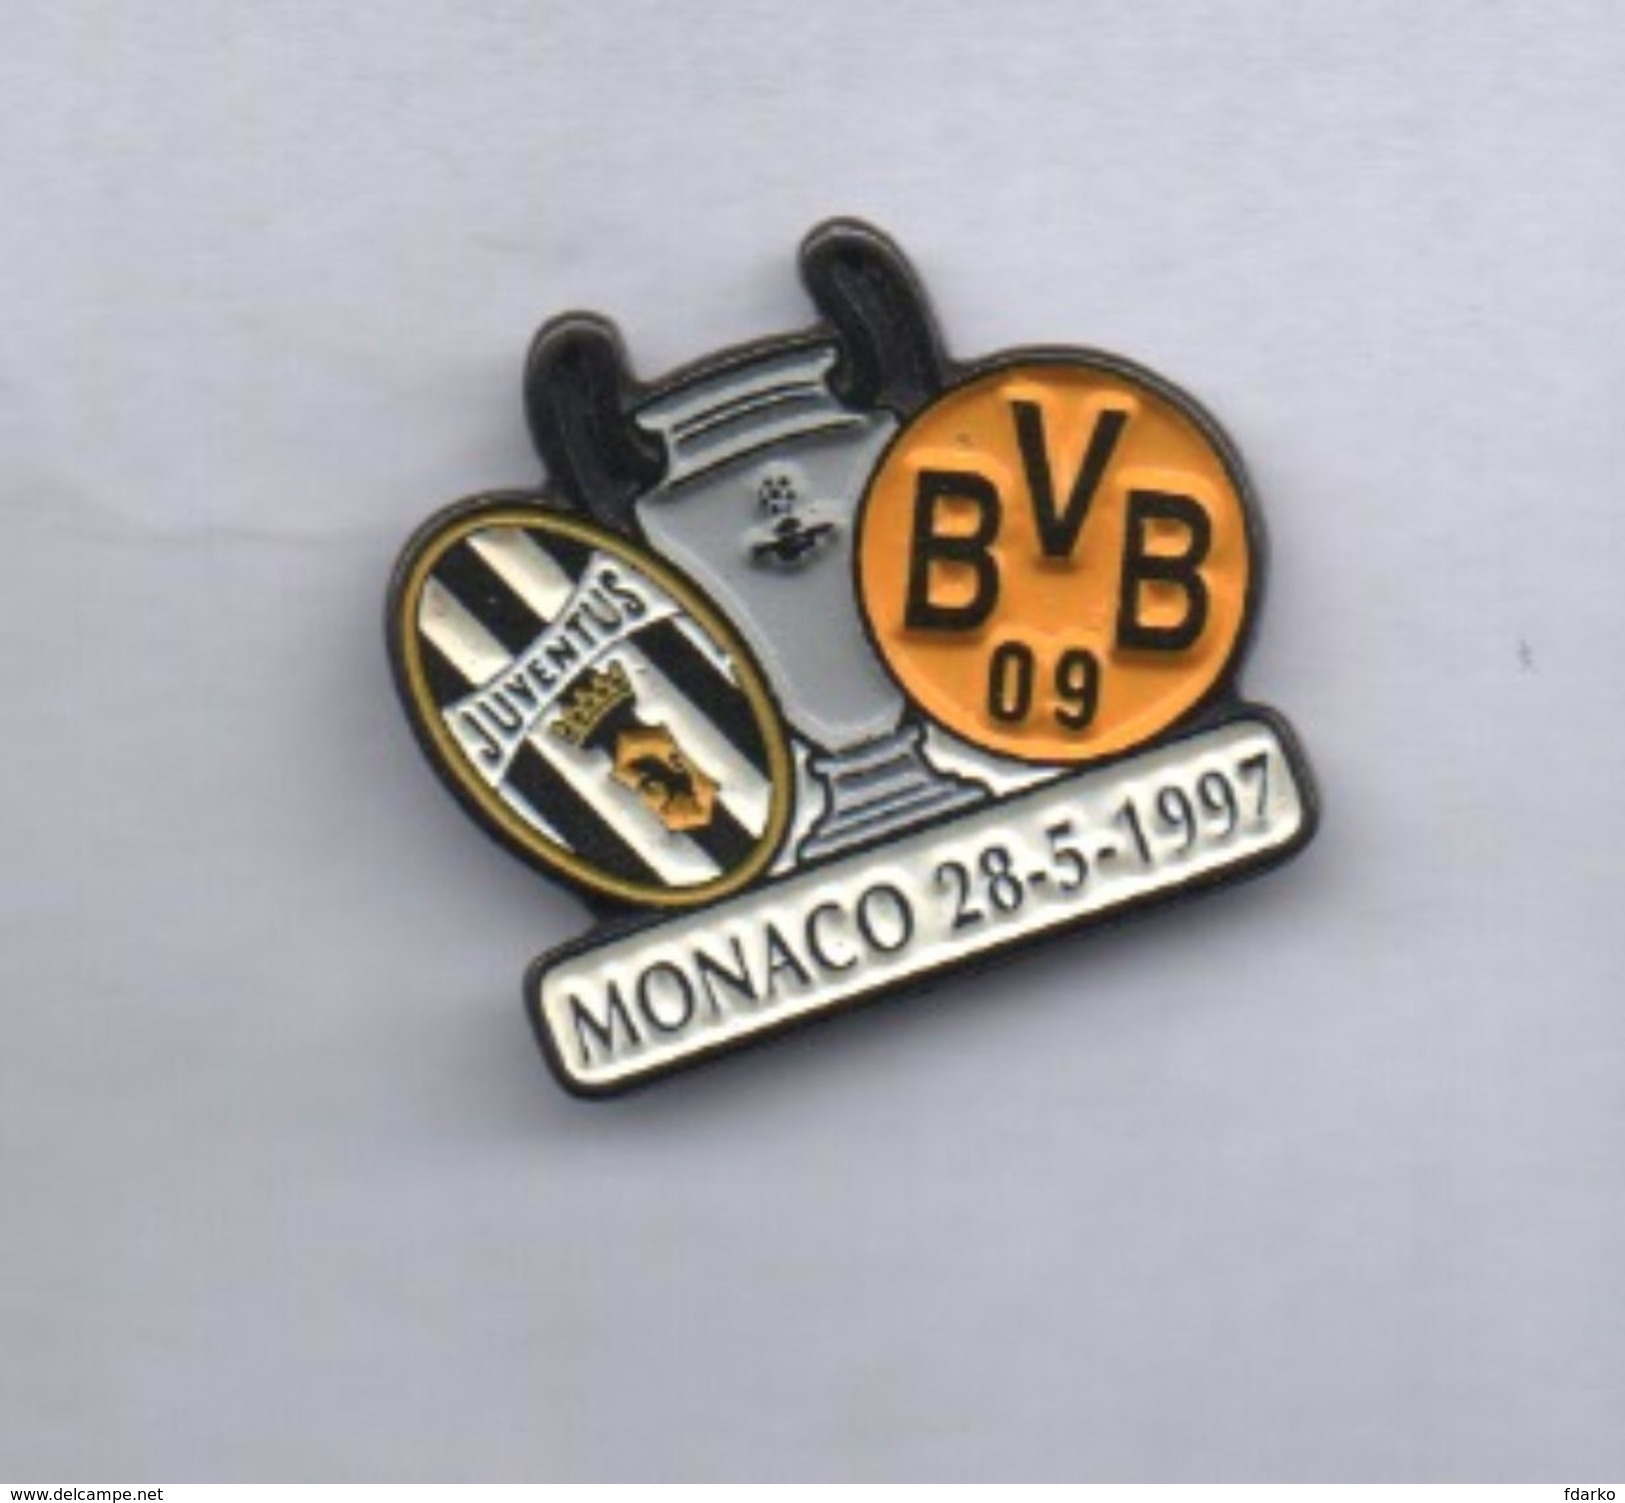 Finale Coppa UEFA Champions League 1996-199 Juve BVB Monaco 28/5/1997 BiancoNero Football Pins Juventus Ufficiale - Football